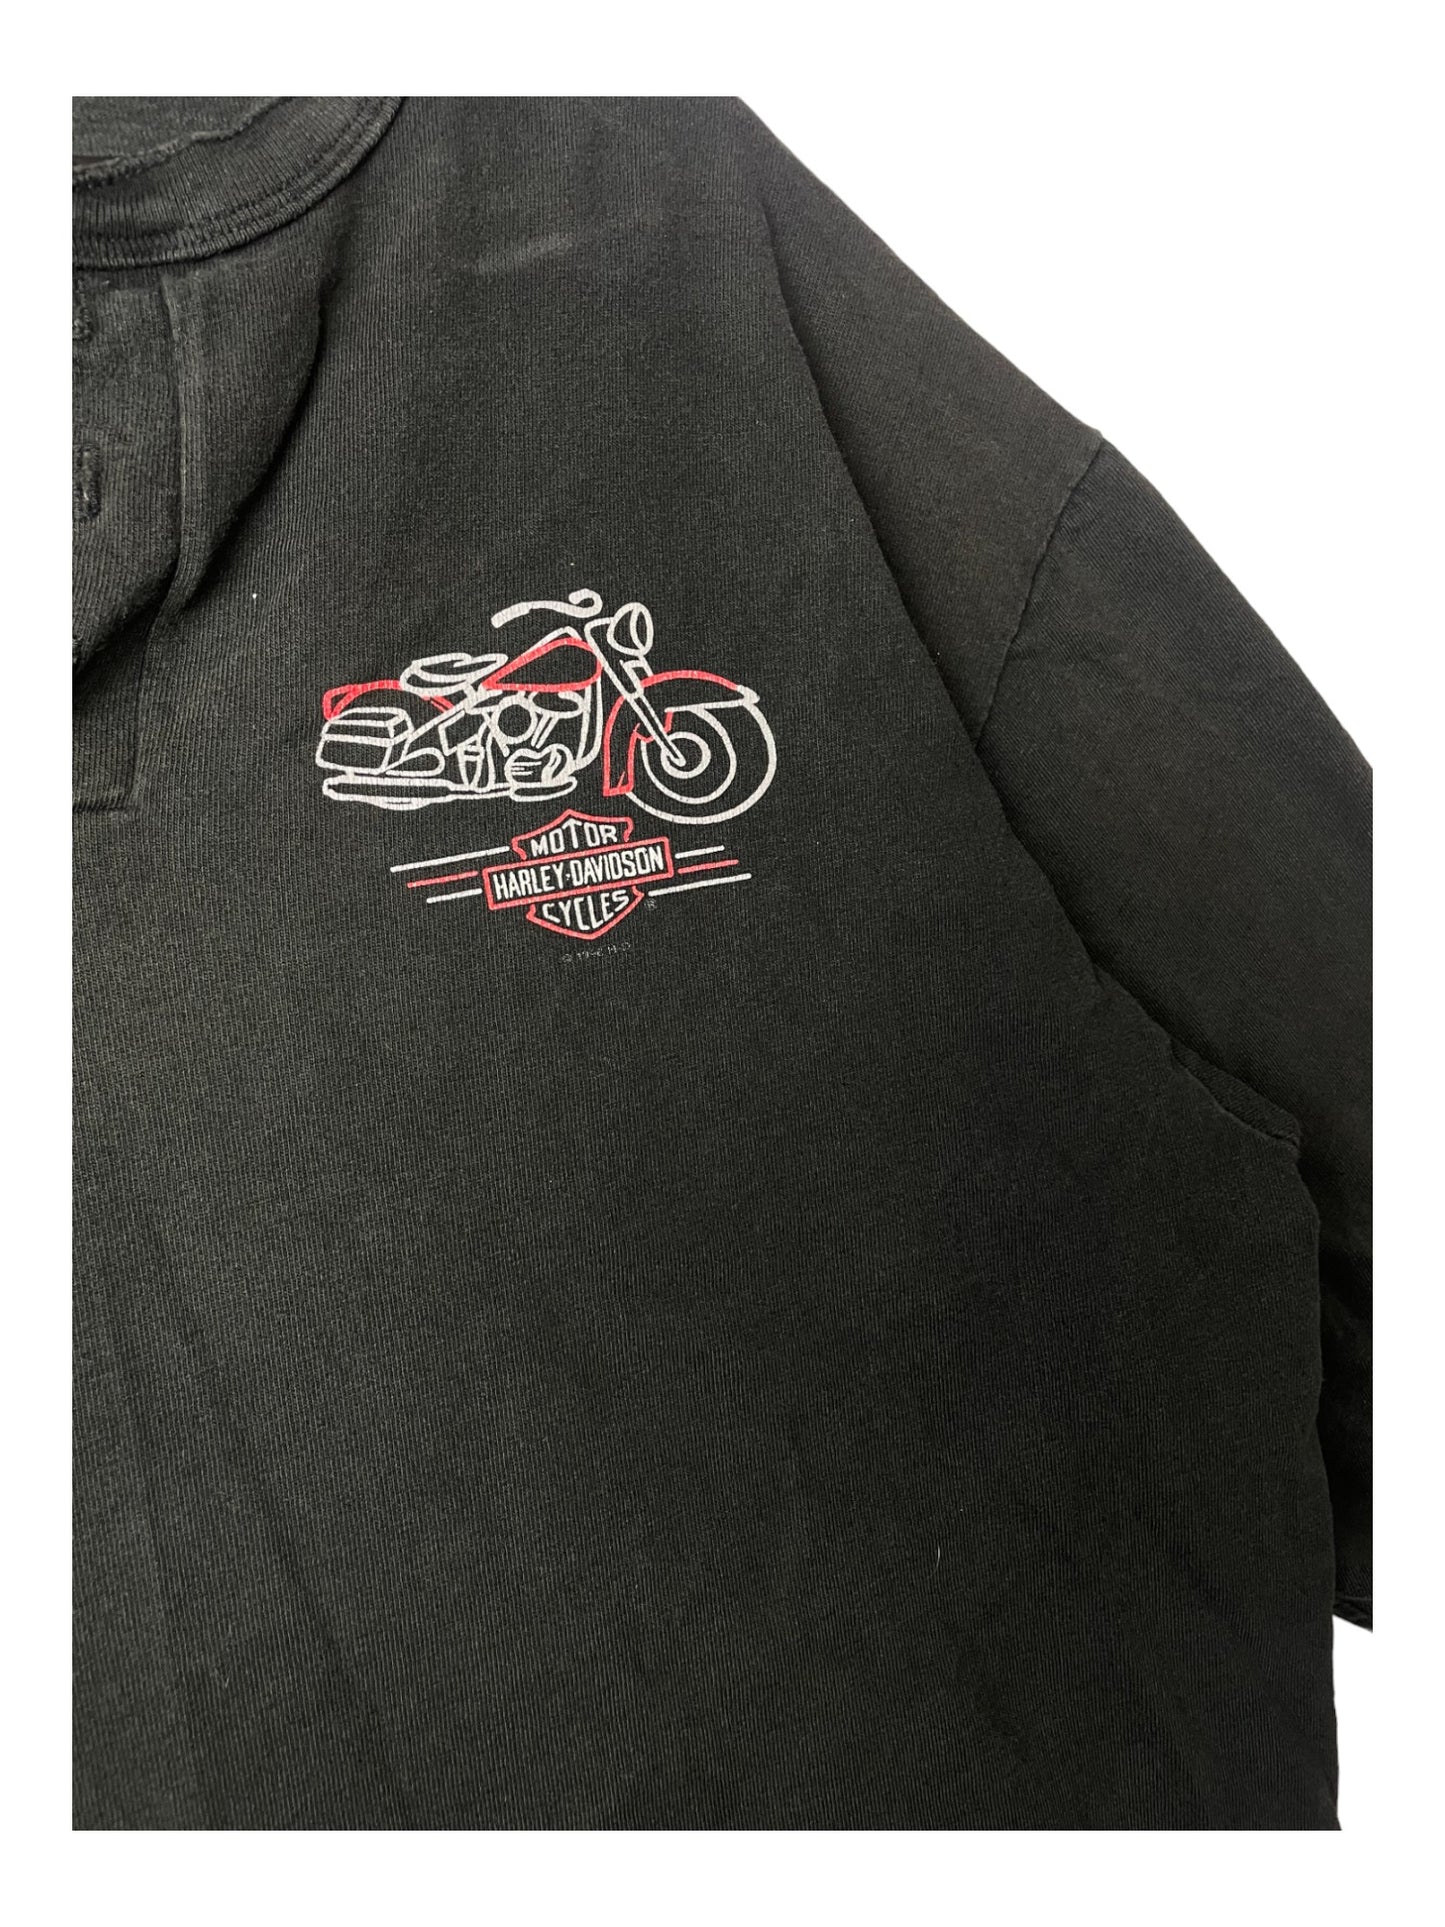 Long Sleeve Harley-Davidson Wisconsin